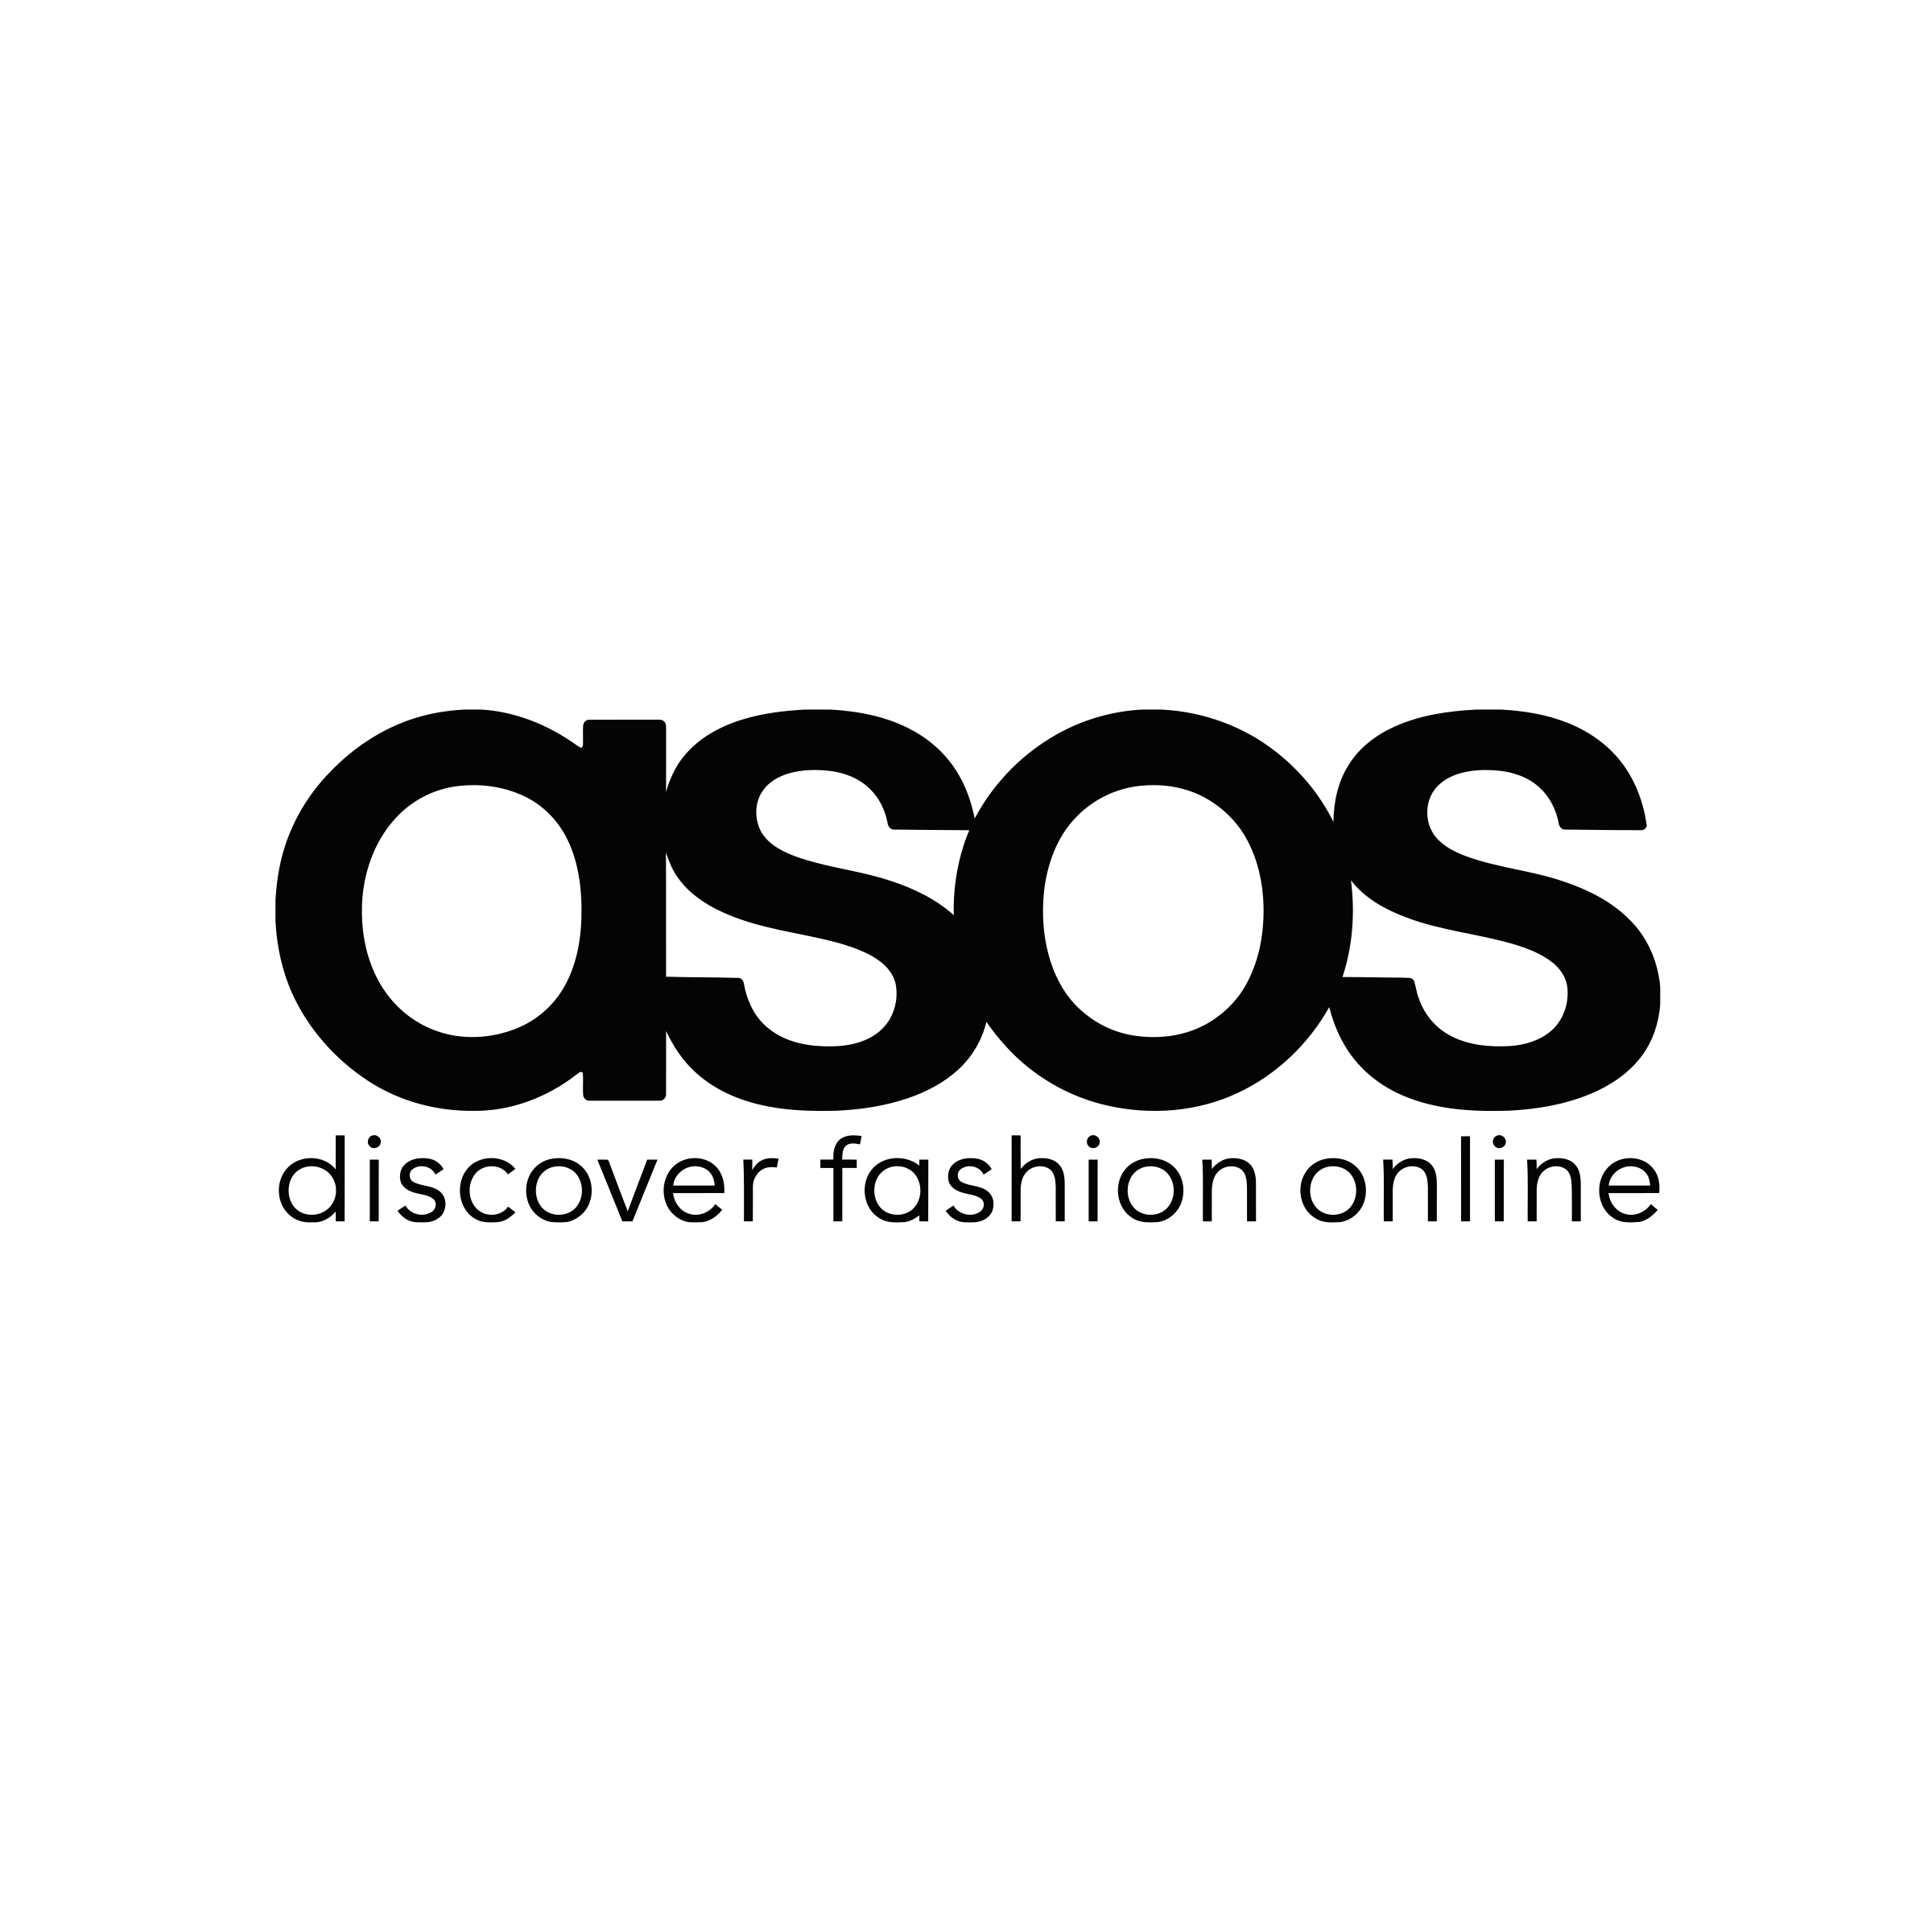 Asos.com Logo - ASOS Logo PNG Transparent & SVG Vector